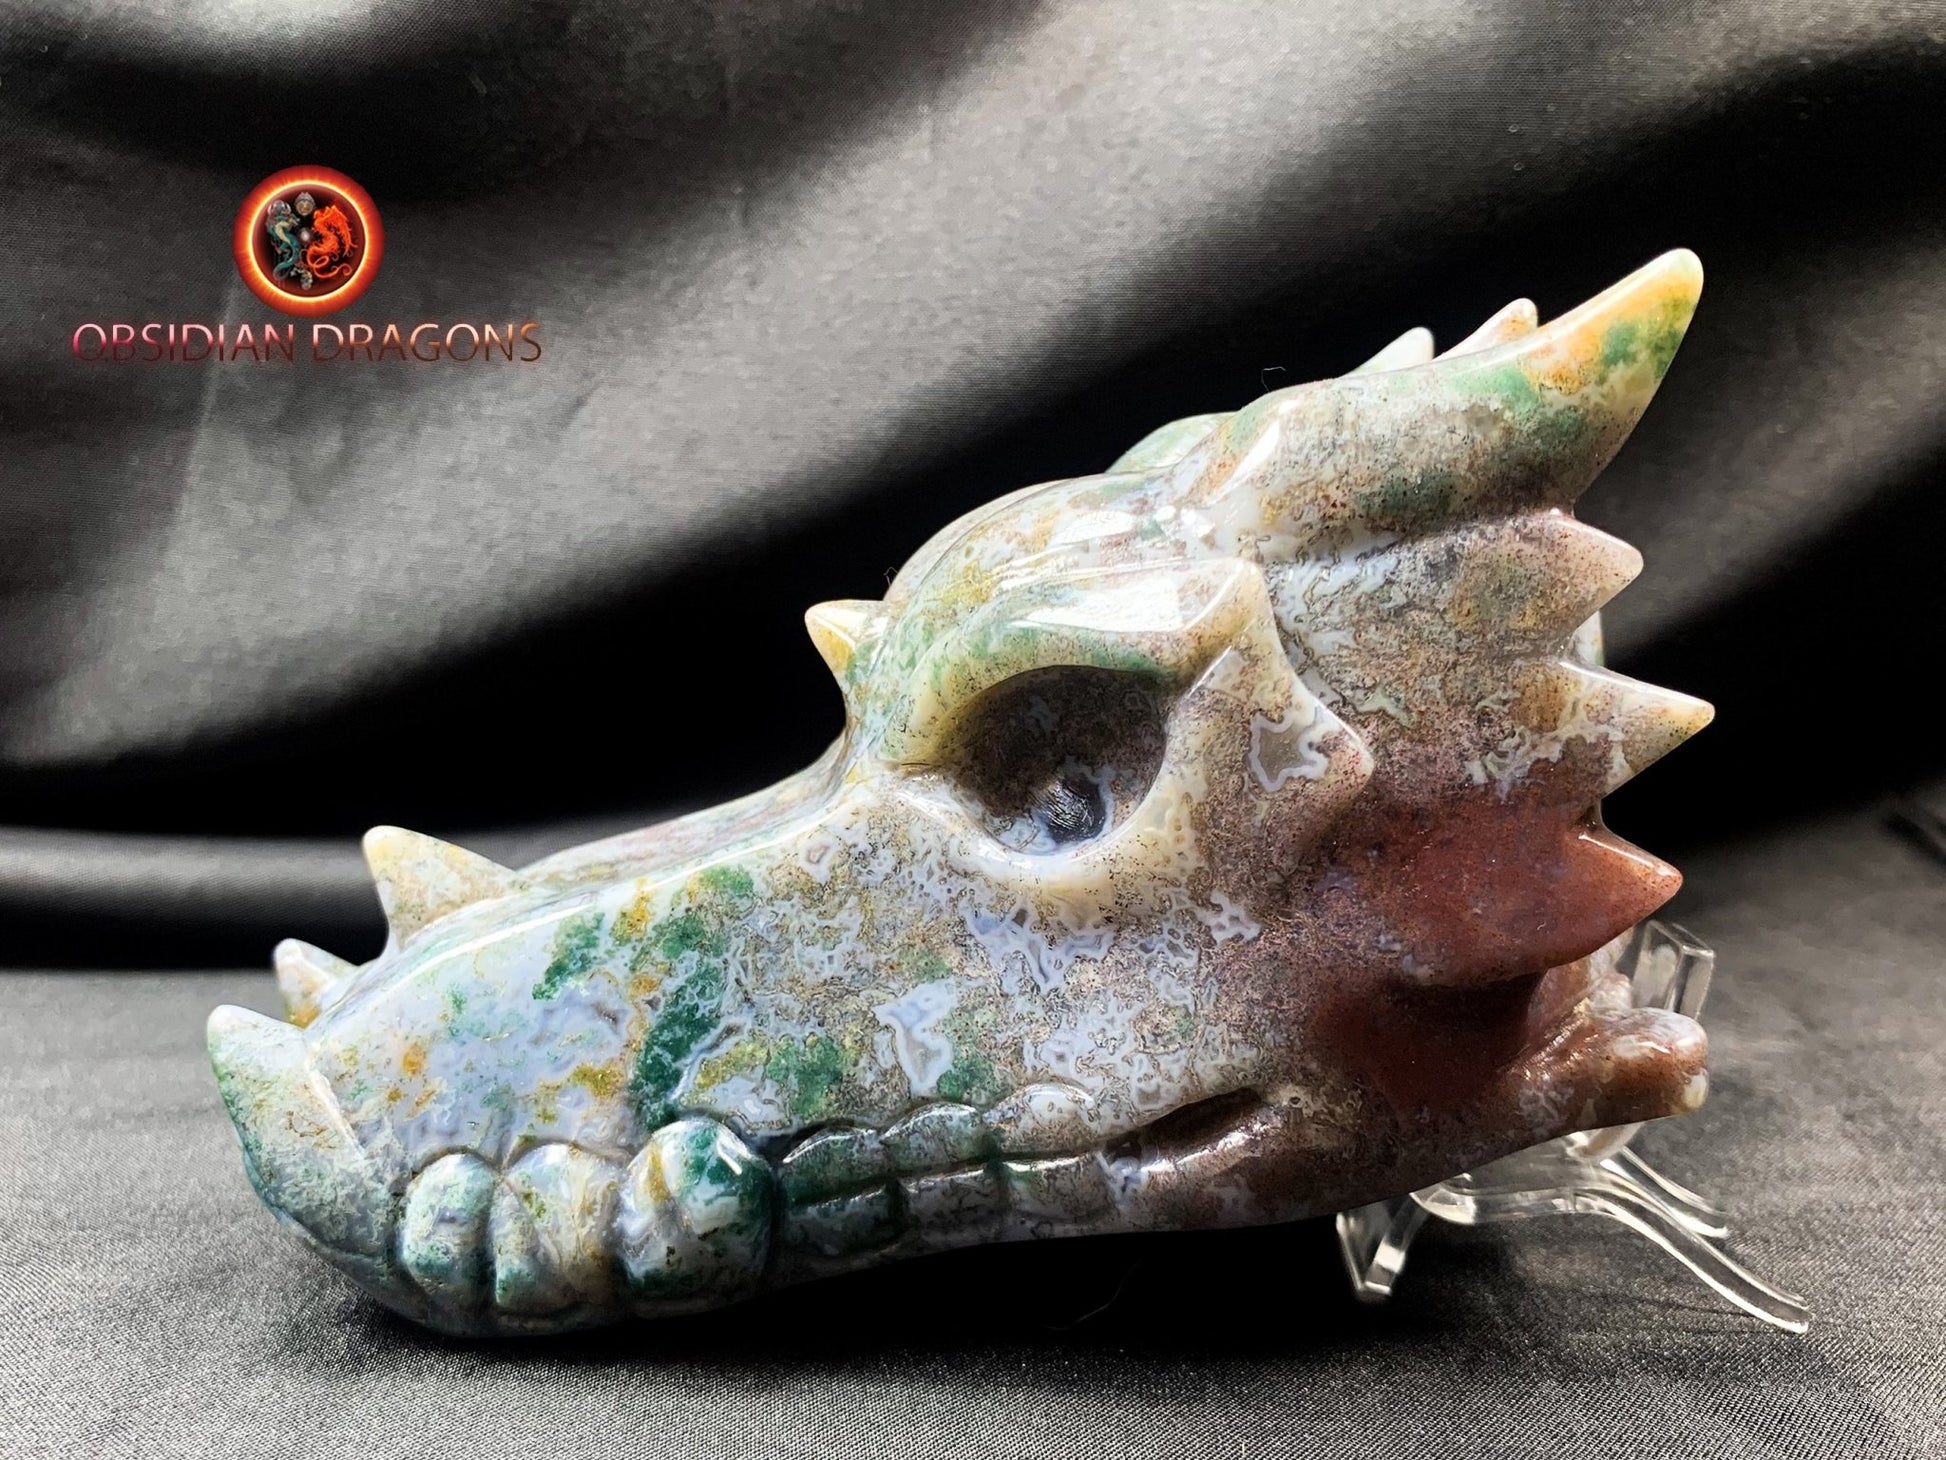 Crâne de dragon, tête de dragon, crâne de cristal, dragon skull